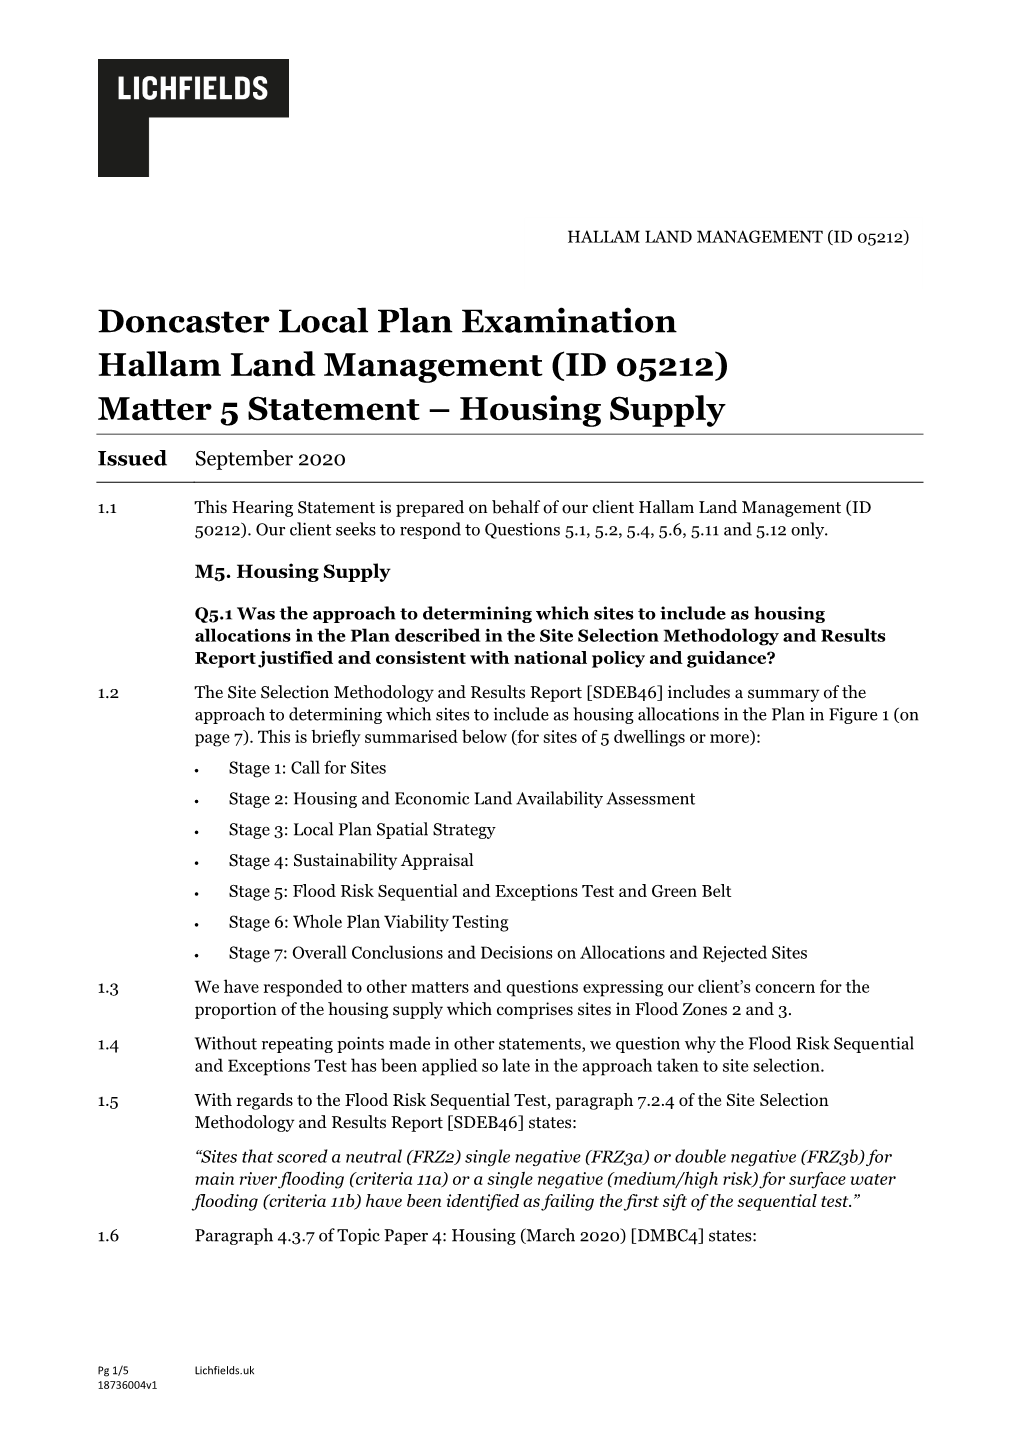 Doncaster Local Plan Examination Hallam Land Management (ID 05212) Matter 5 Statement – Housing Supply